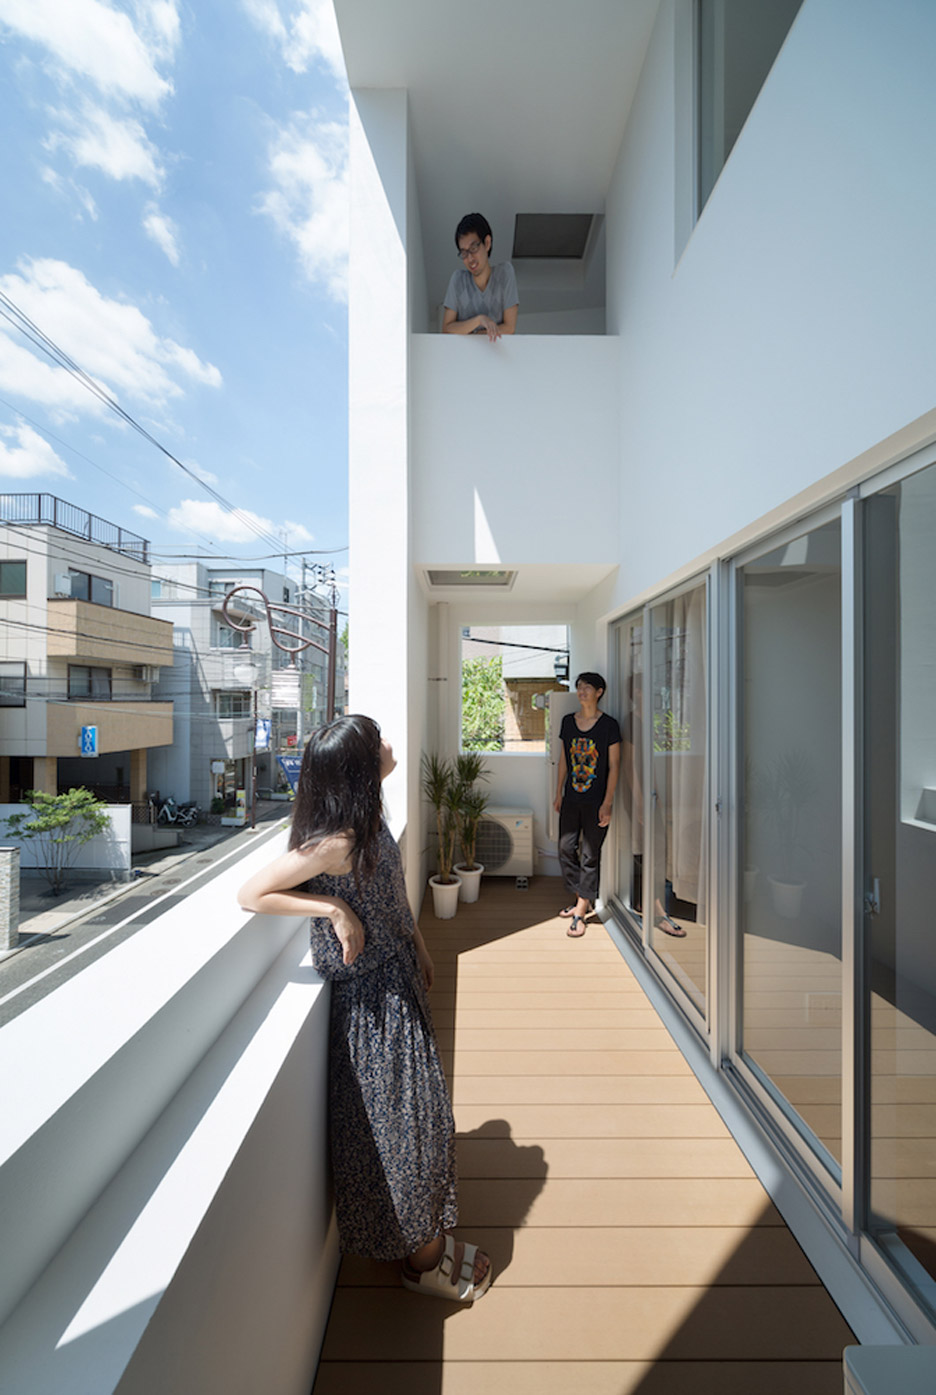 Kitasenzoku Apartment by Tomoyuki Kurokawa Architects